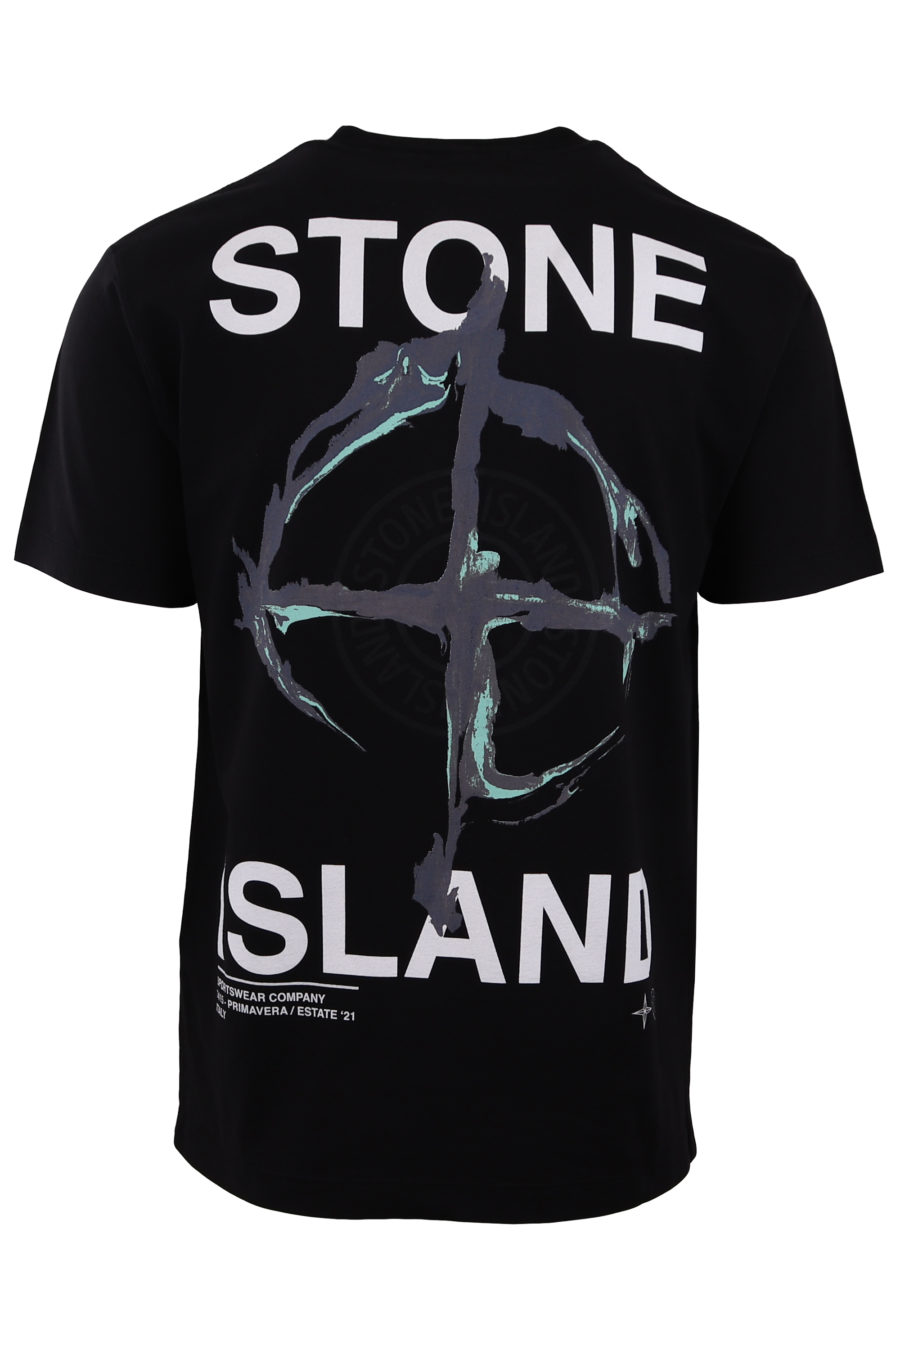 T-shirt Stone Island noir avec petit logo - IMG 3189